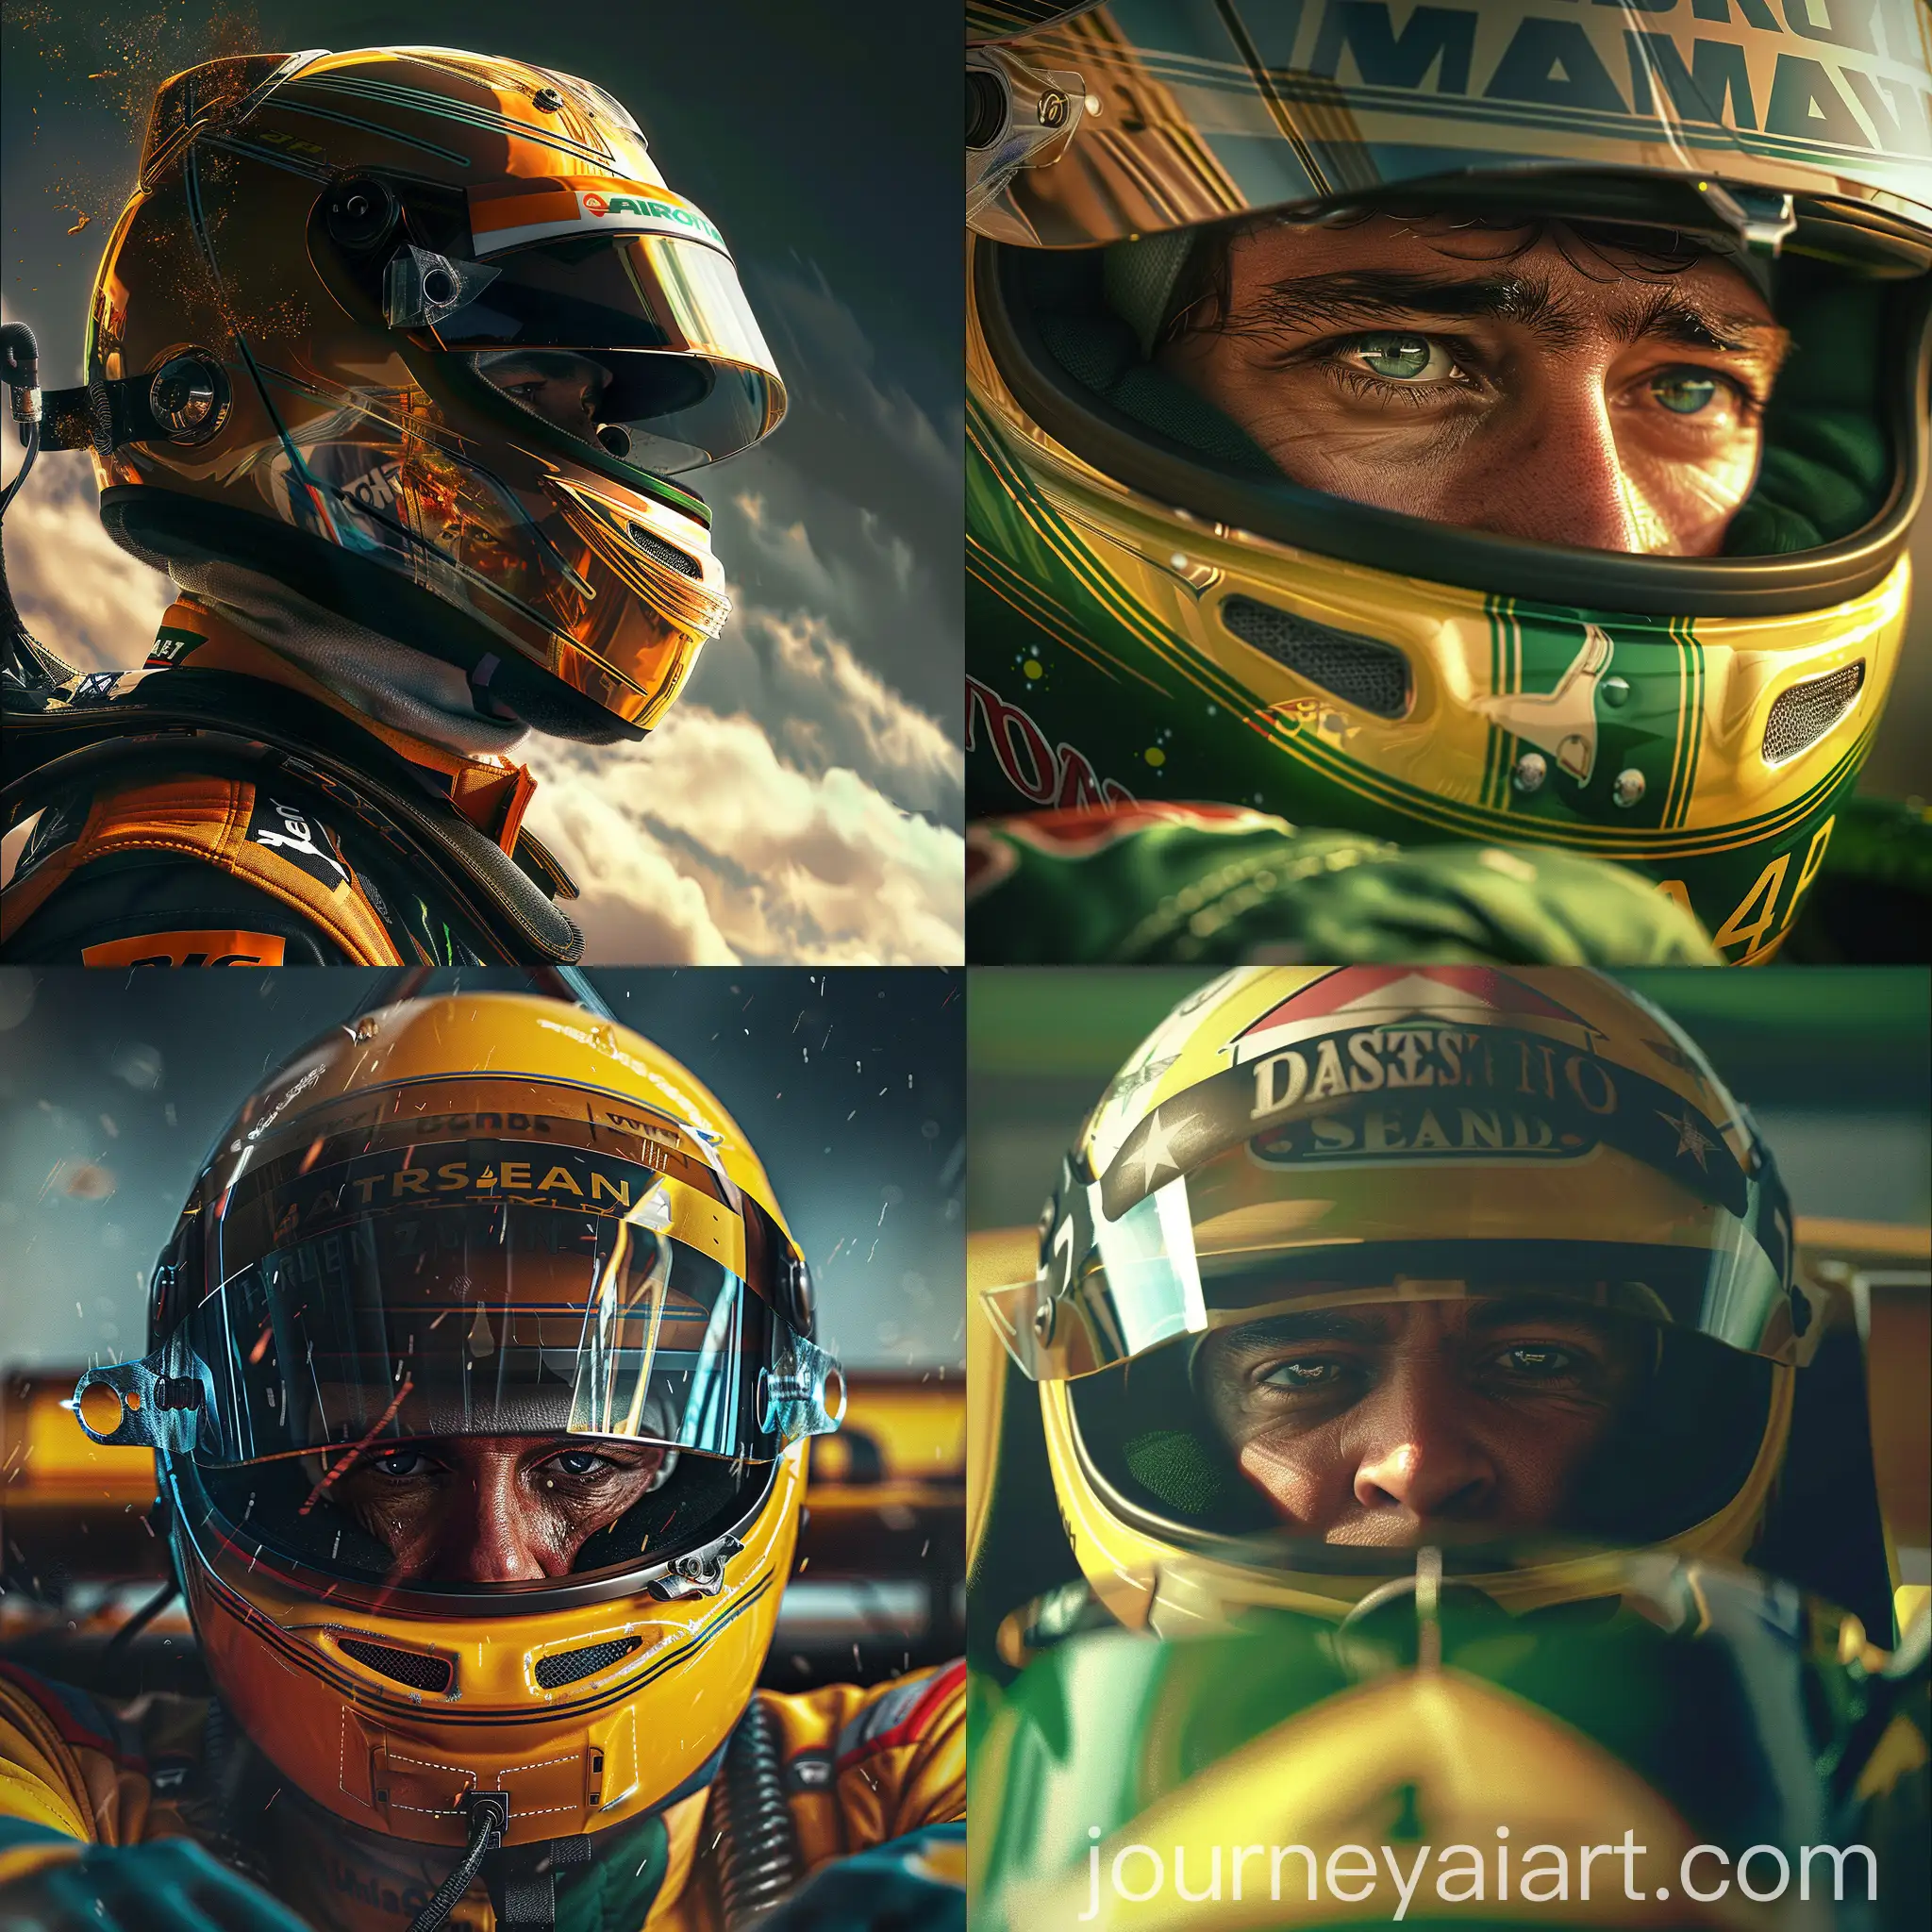 Photorealistic-Portrait-of-Brazilian-Formula-1-Champion-Ayrton-Senna